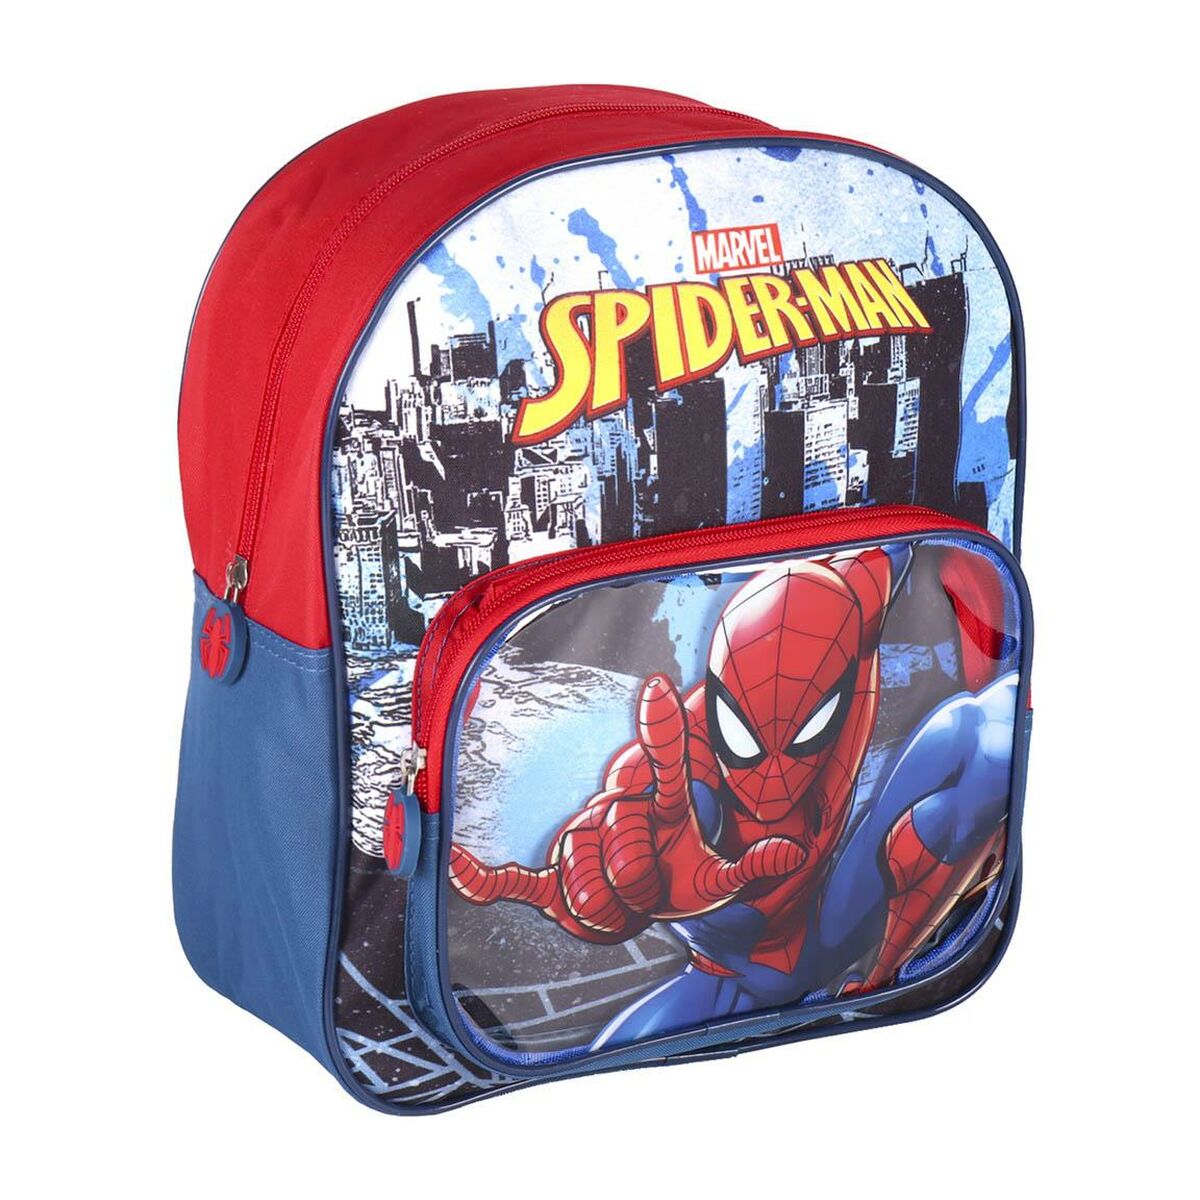 School Bag Spider-Man Red 25 x 30 x 12 cm